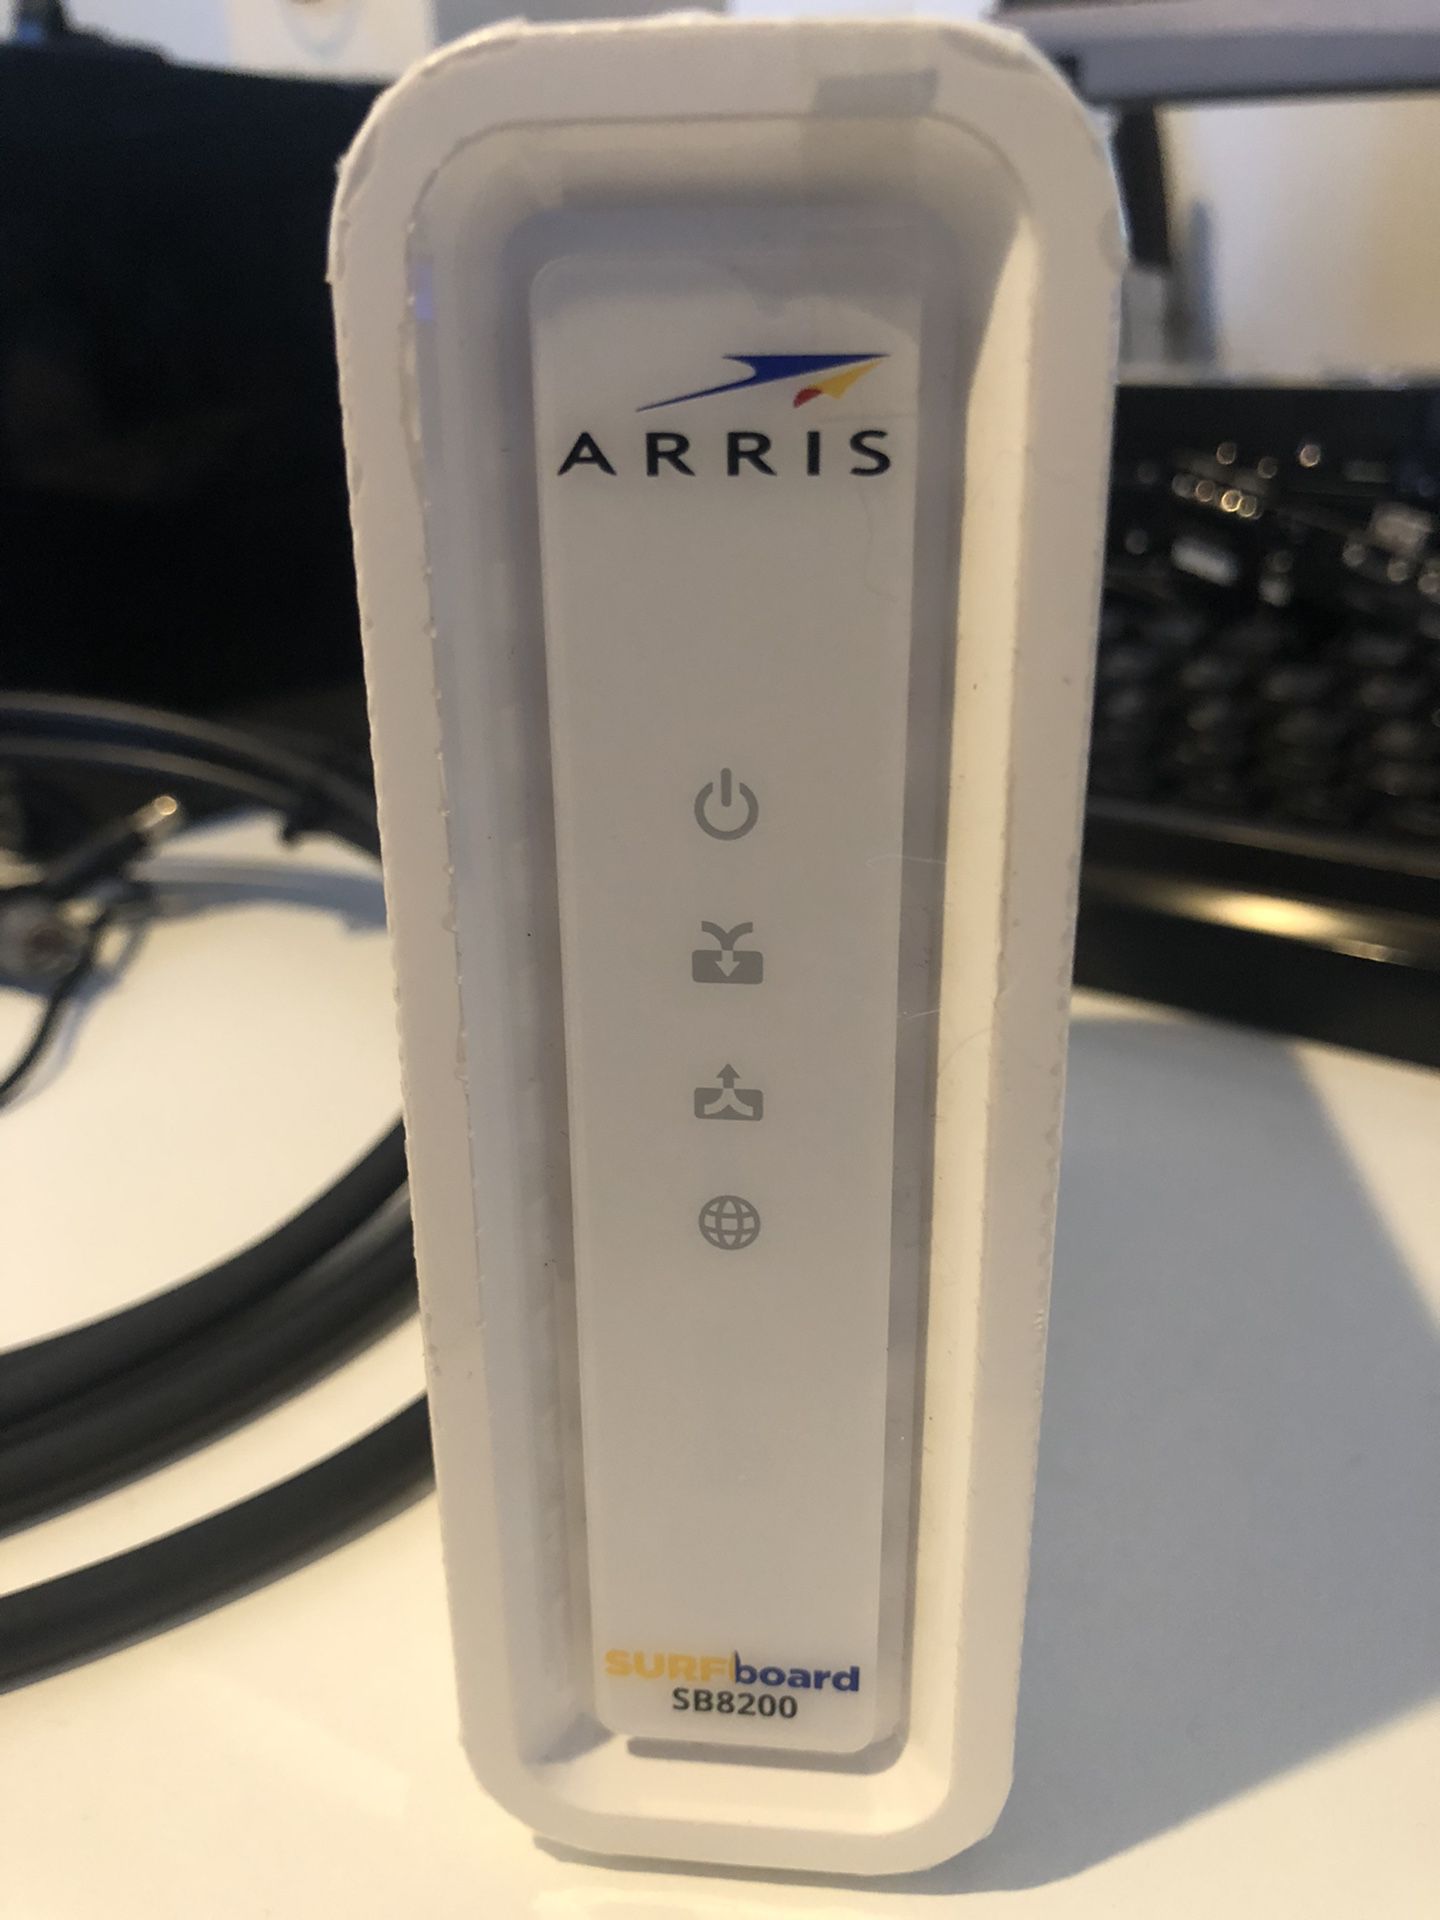 Arris SB8200 Cable Modem (for Comcast)